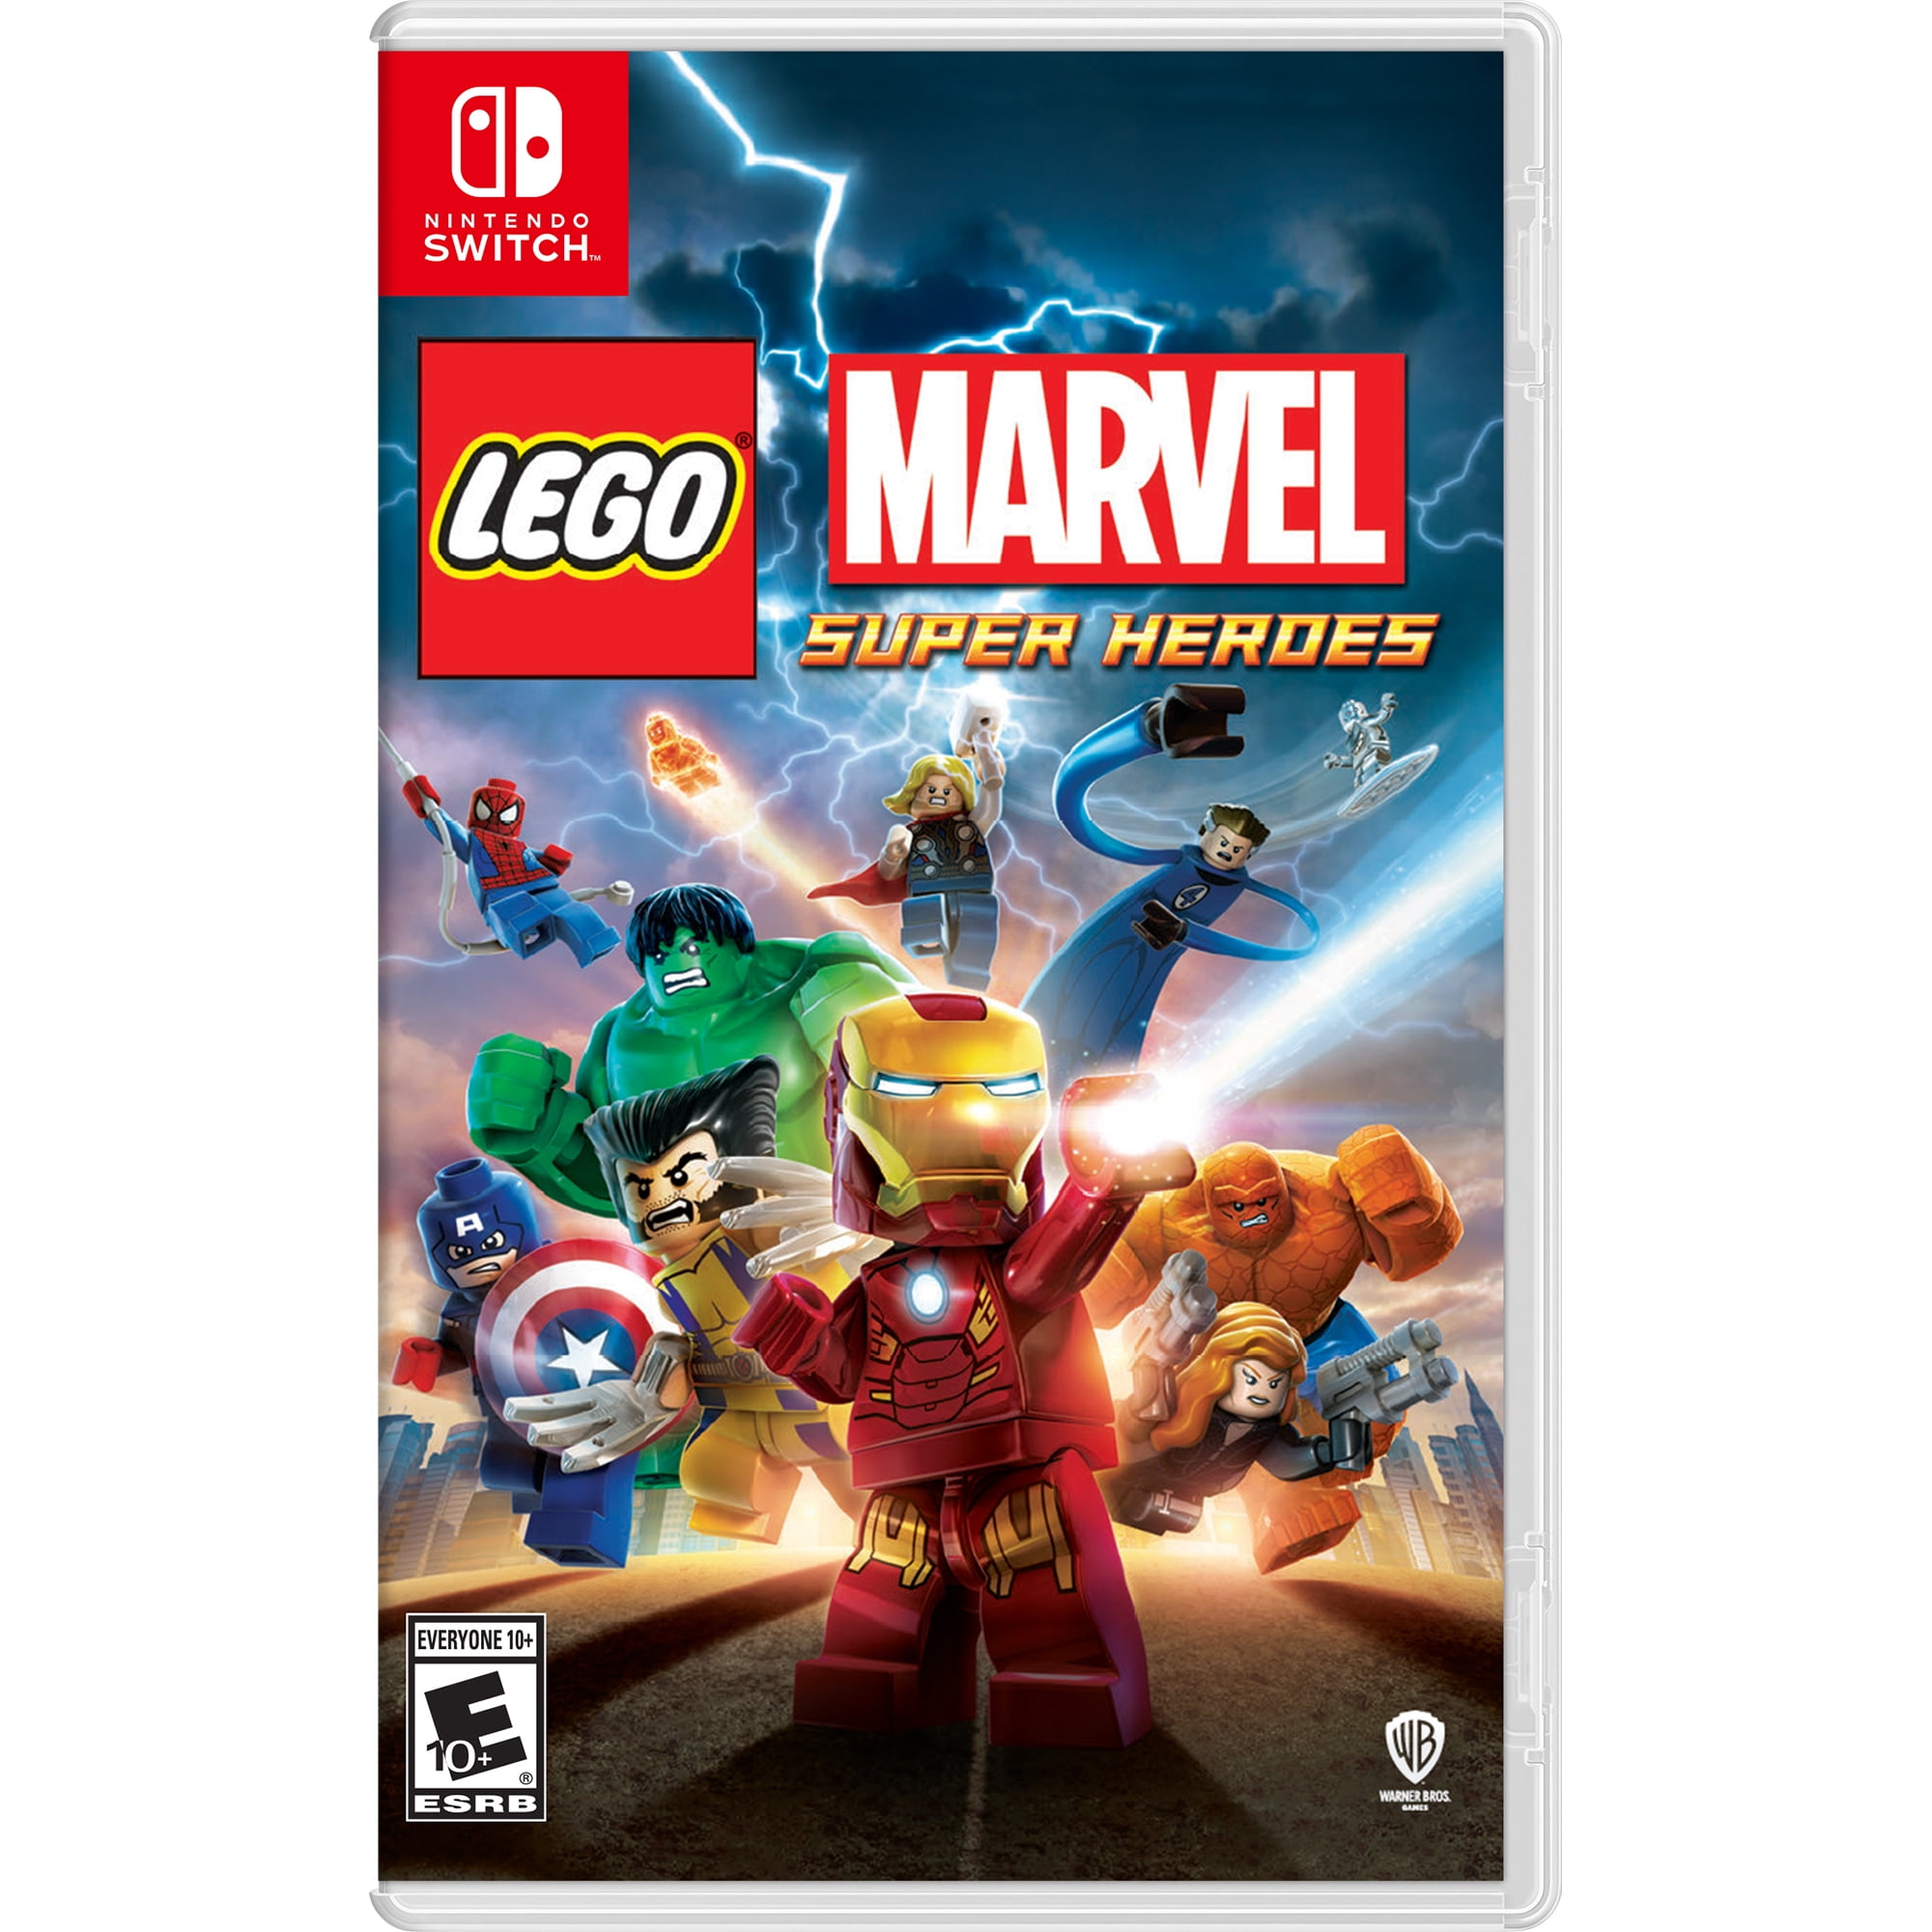 LEGO Marvel Super 2 Heroes, Warner Bros. Games, Nintendo [Physical] - Walmart.com